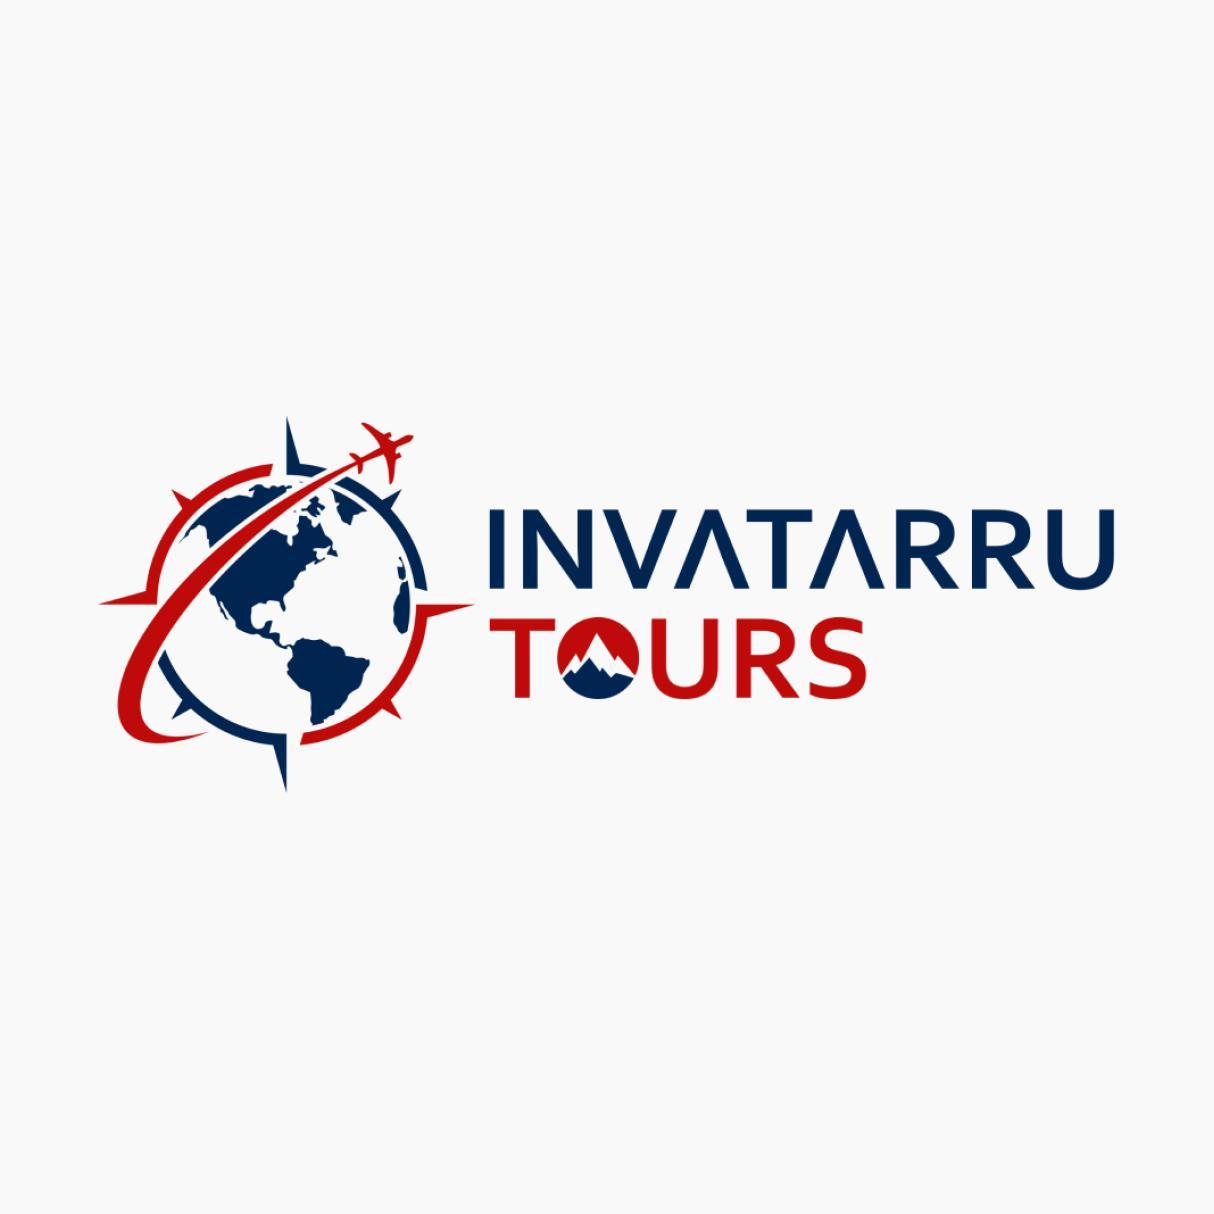 Invatarru Tours logo